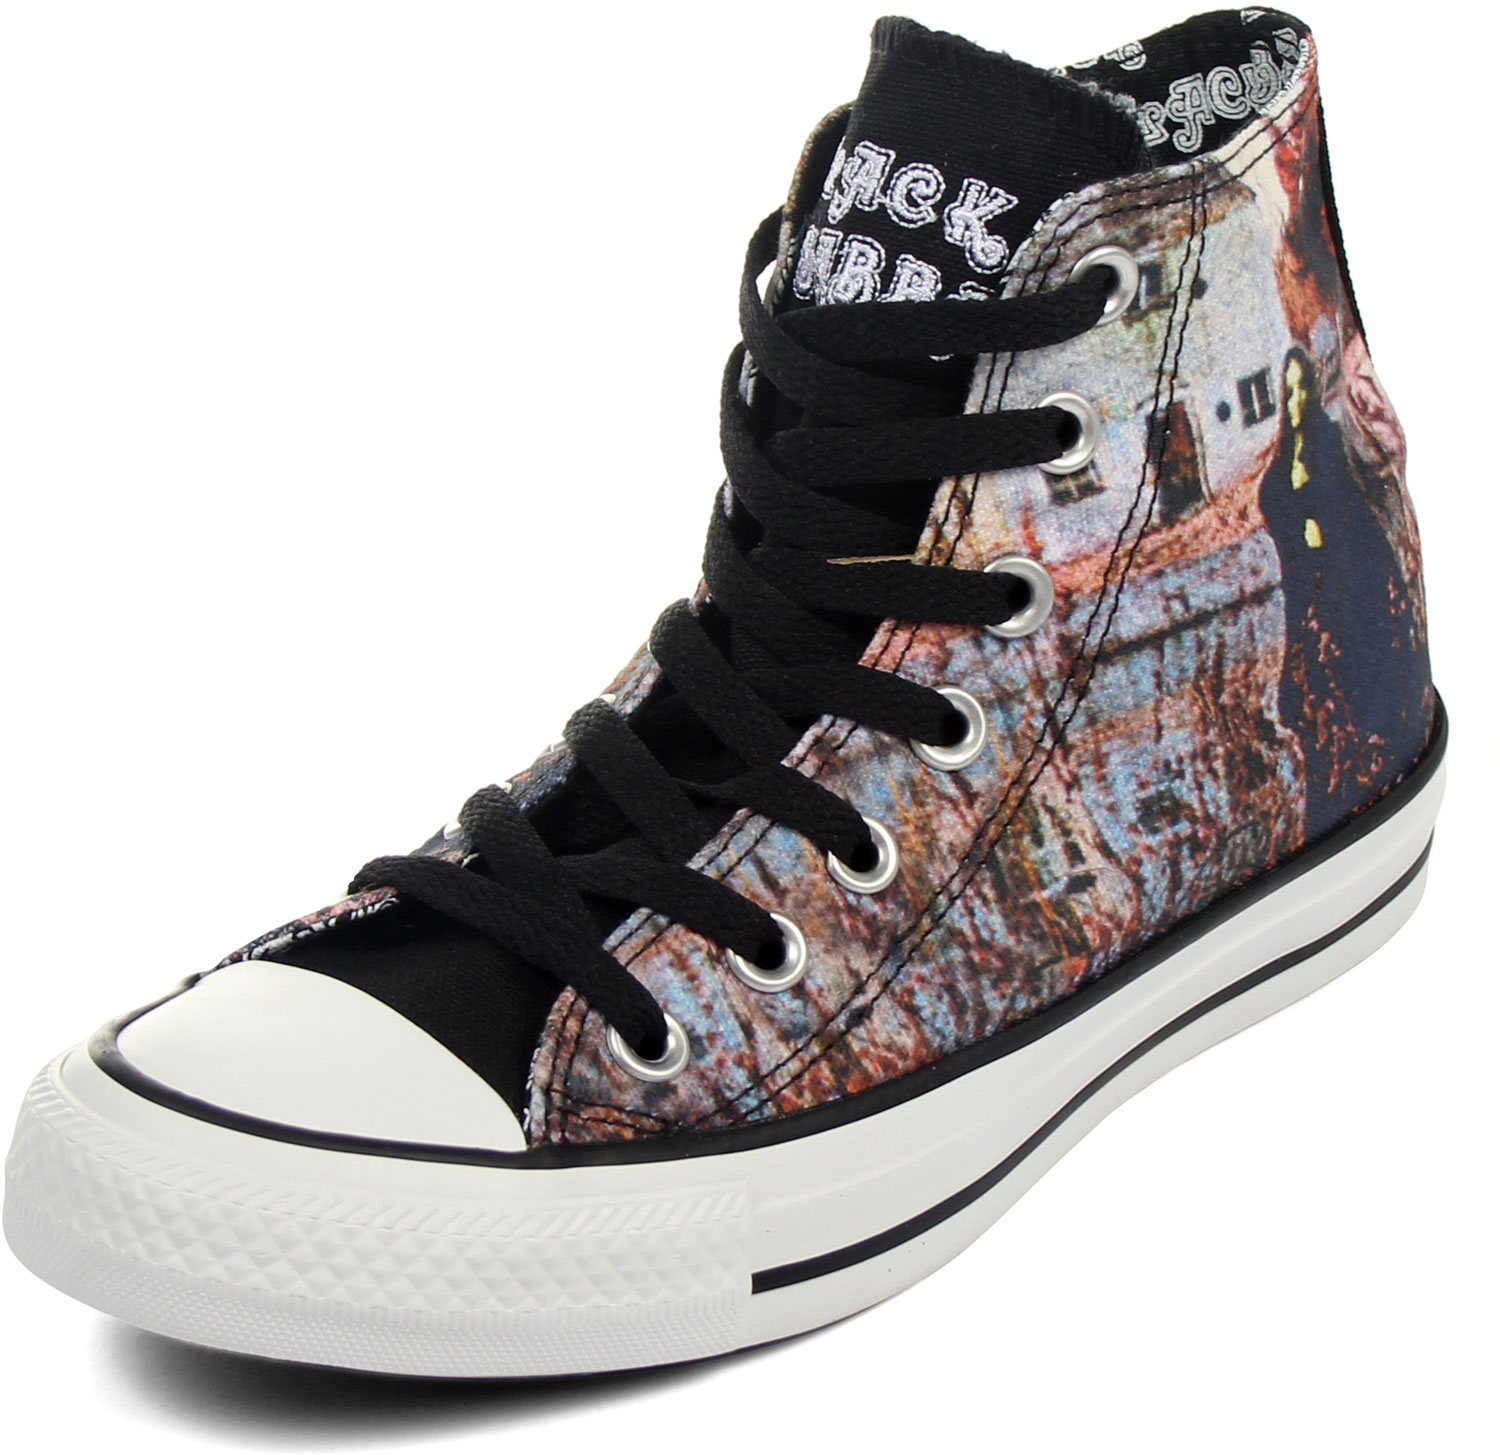 Converse Chuck Taylor Black Sabbath Edition Shoes